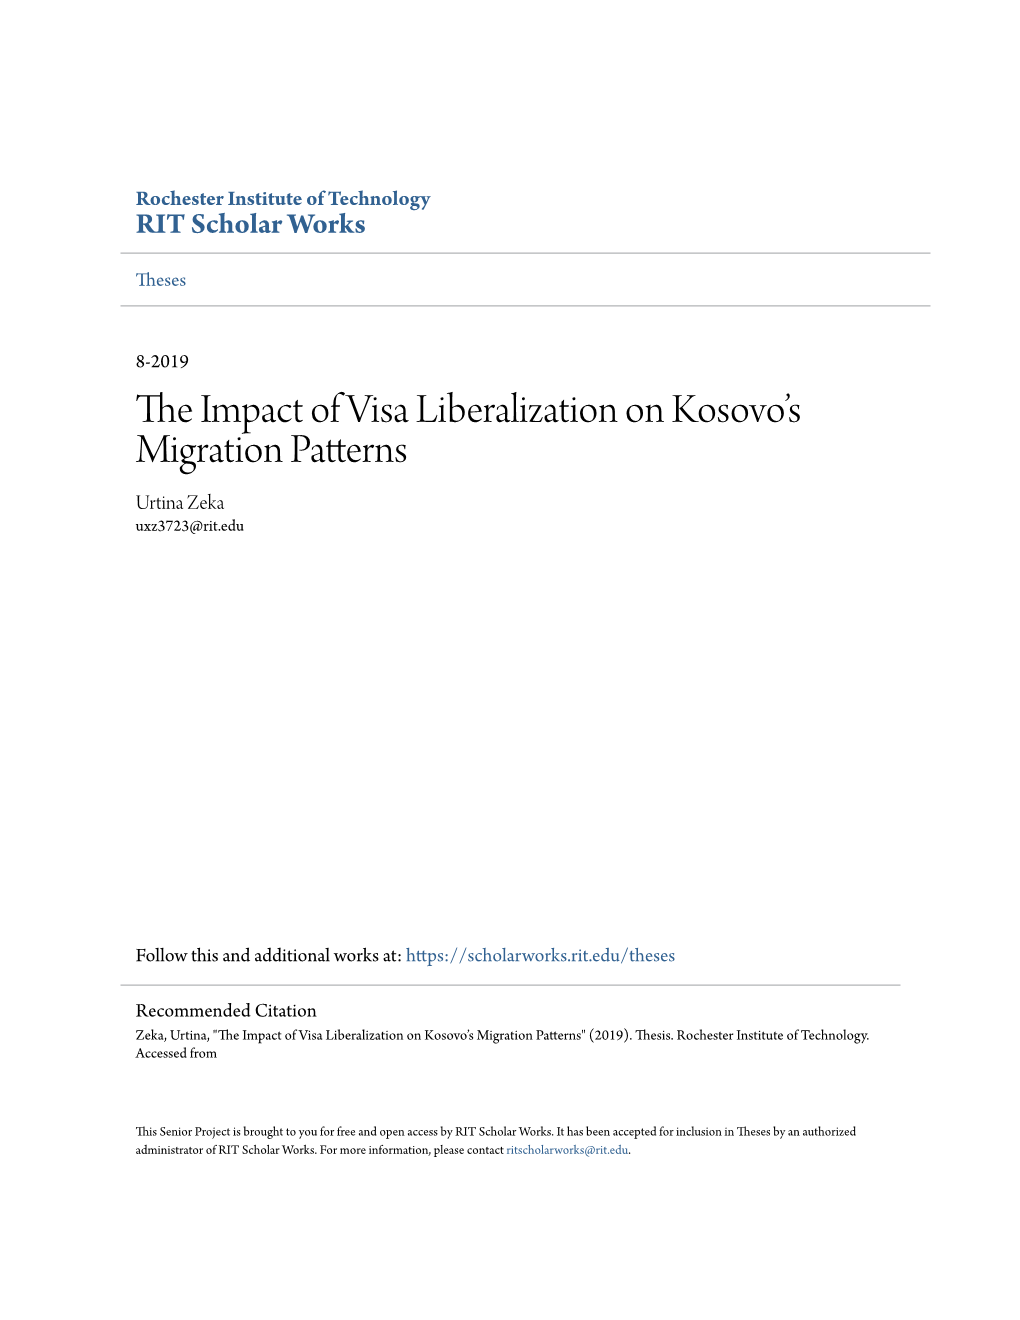 The Impact of Visa Liberalization on Kosovo's Migration Patterns